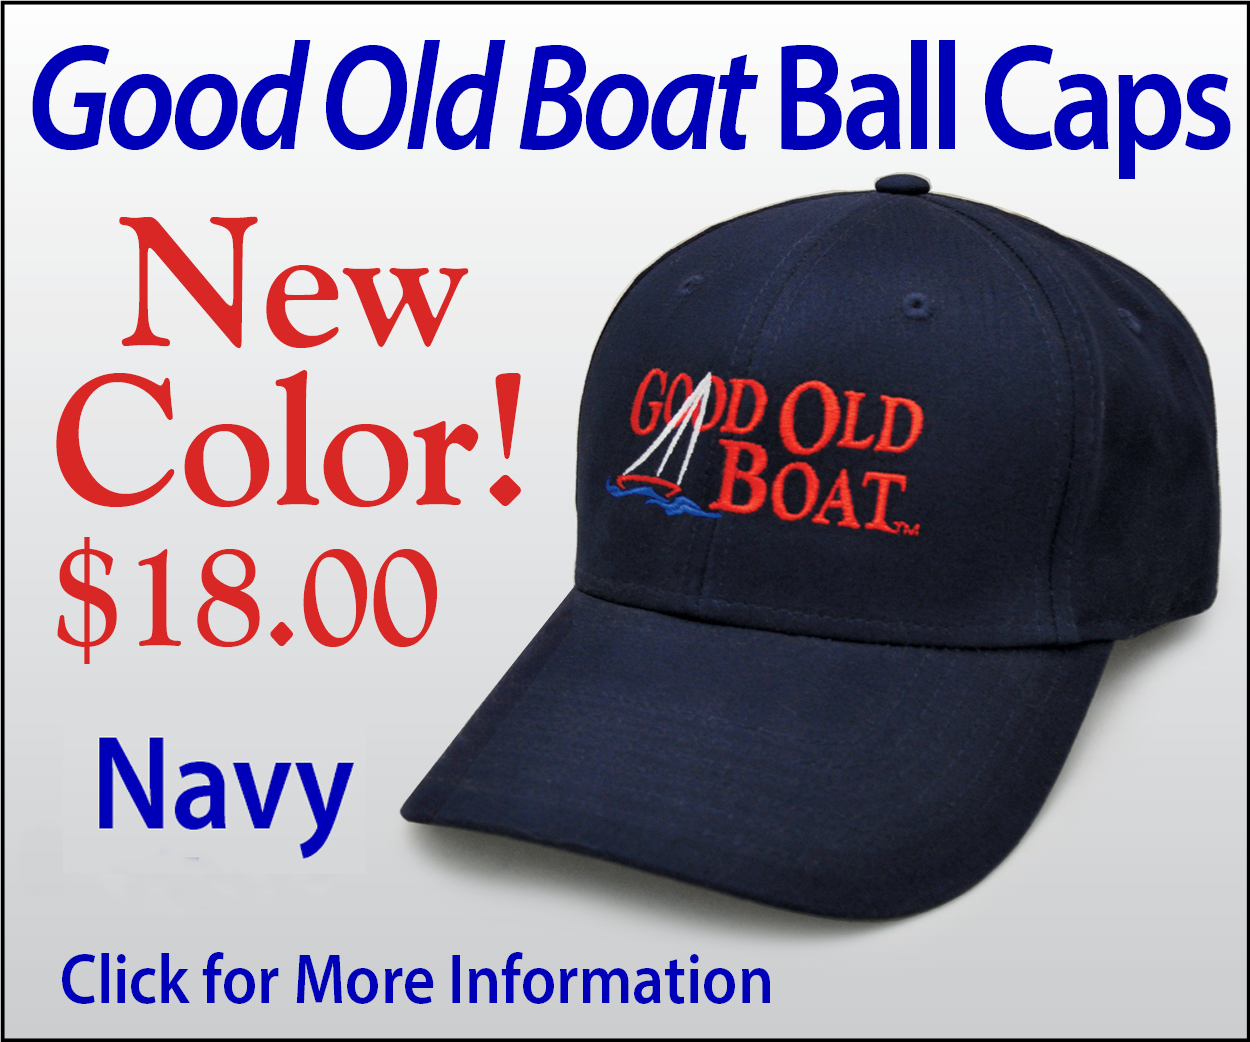 New Good Old Boat Ball Cap